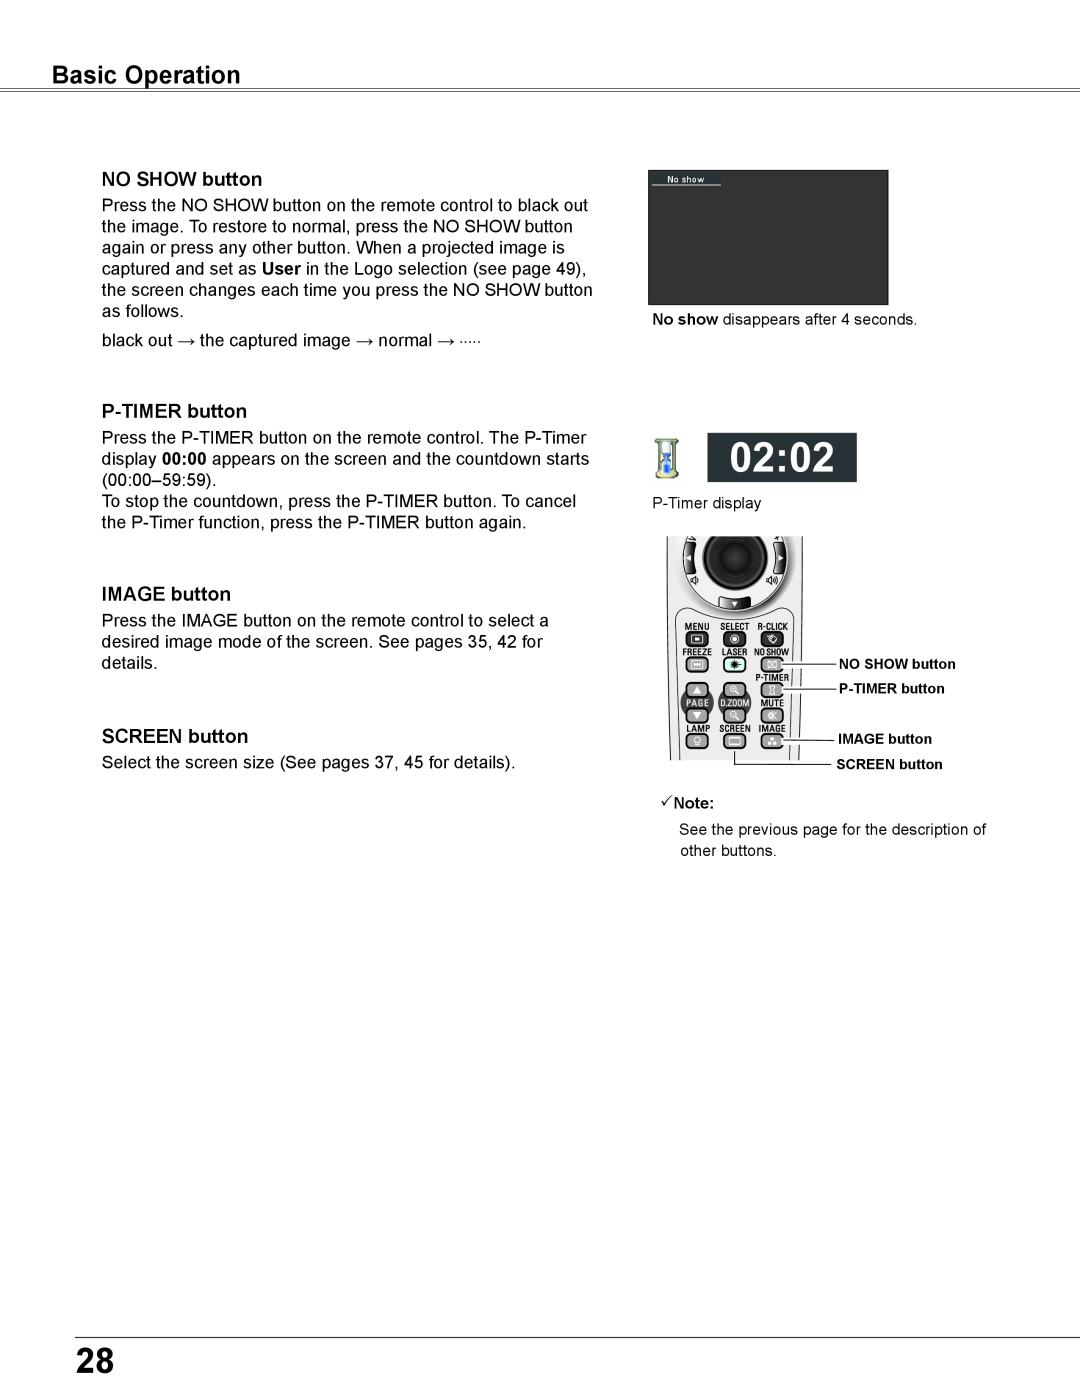 Sanyo PLC-XU355A, PLC-XU305A NO SHOw button, P-TIMER button, IMAGE button, SCREEN button, 0202, Basic Operation, details 